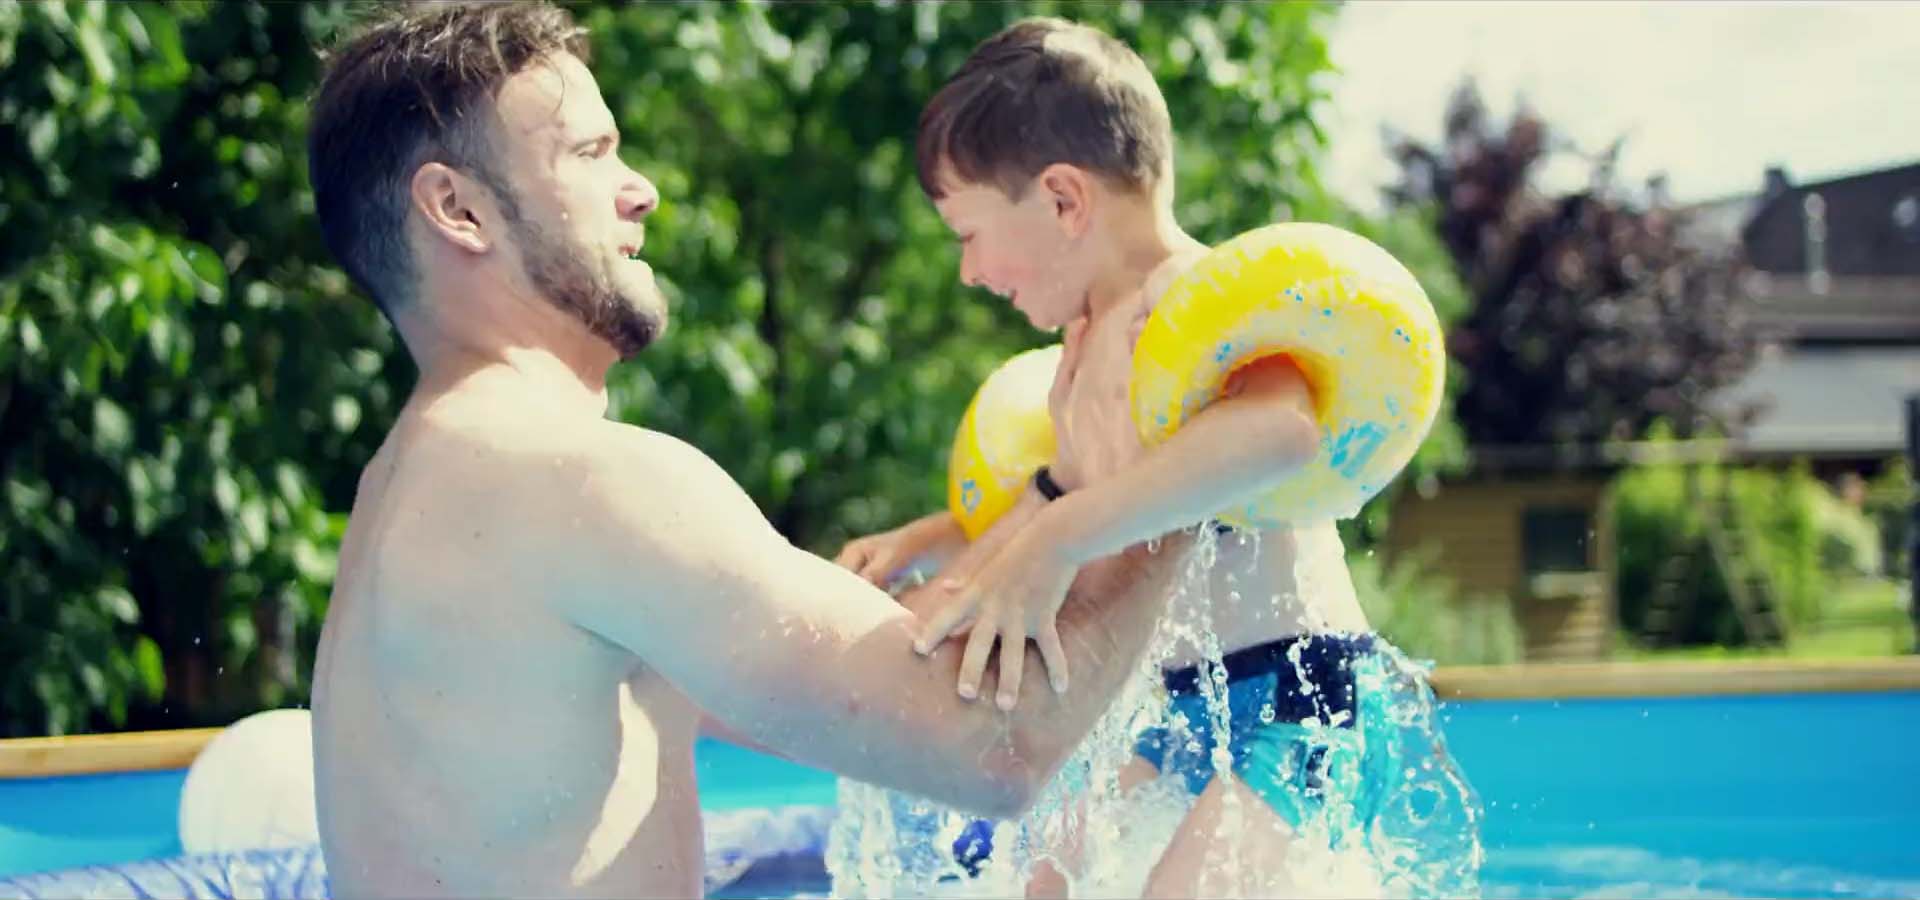 Vater im Pool nimmt seinen Sohn hoch